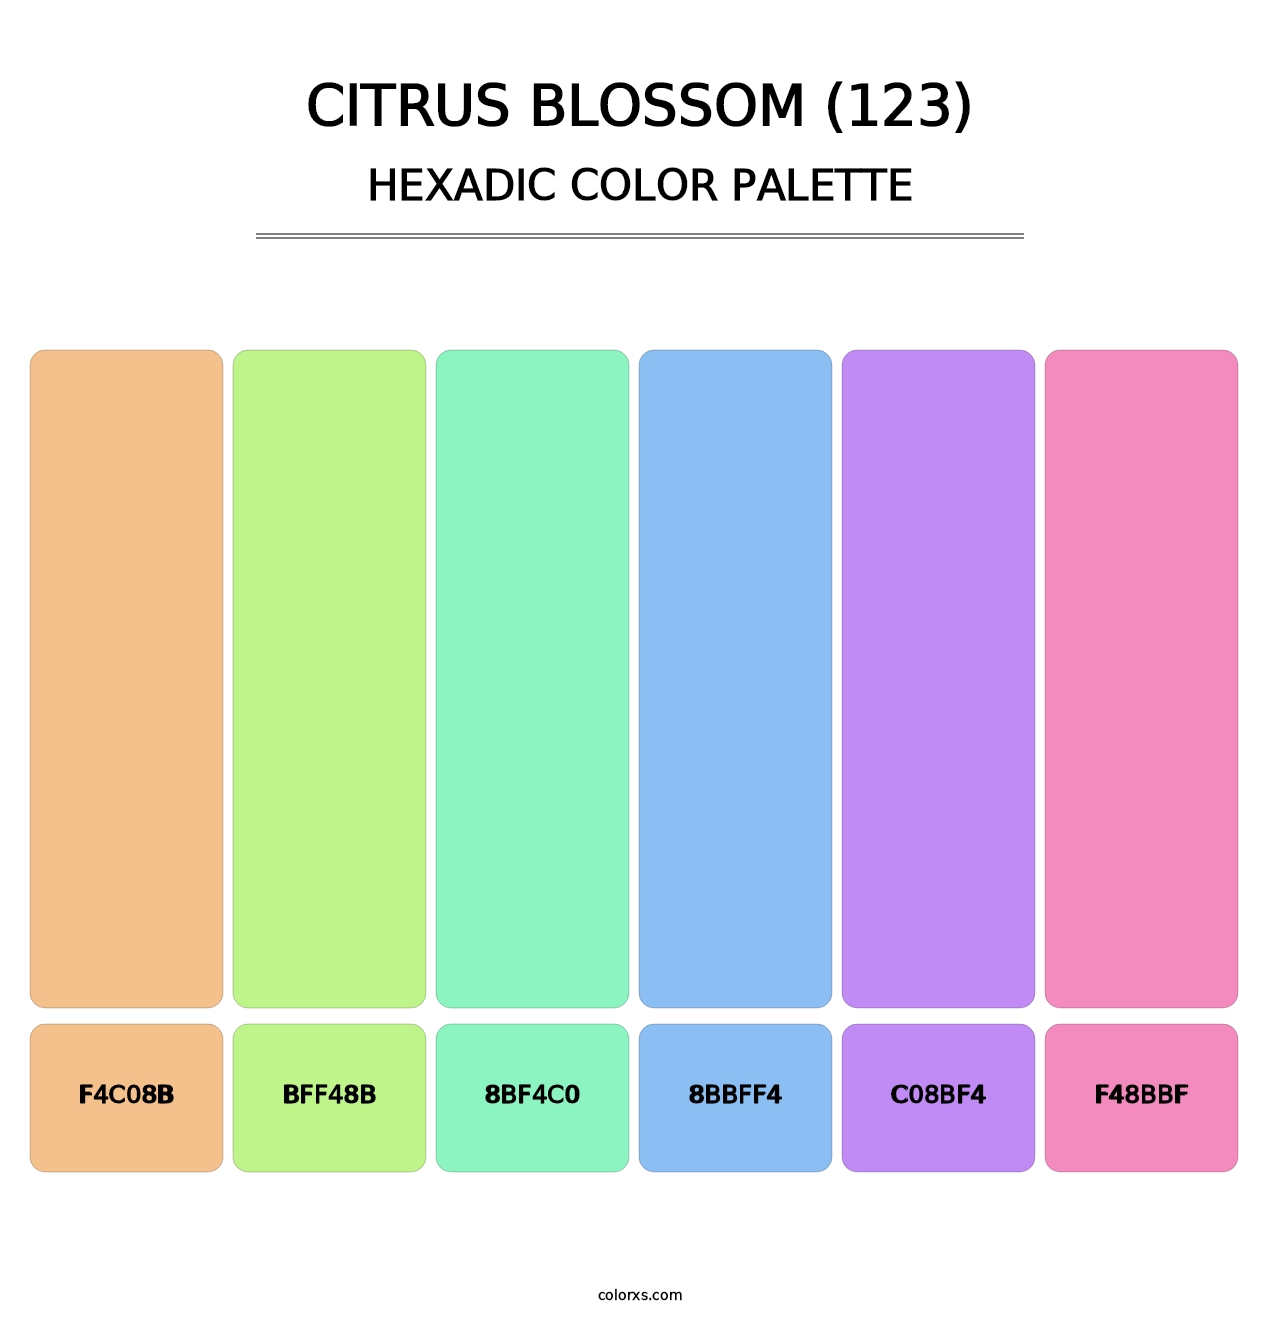 Citrus Blossom (123) - Hexadic Color Palette